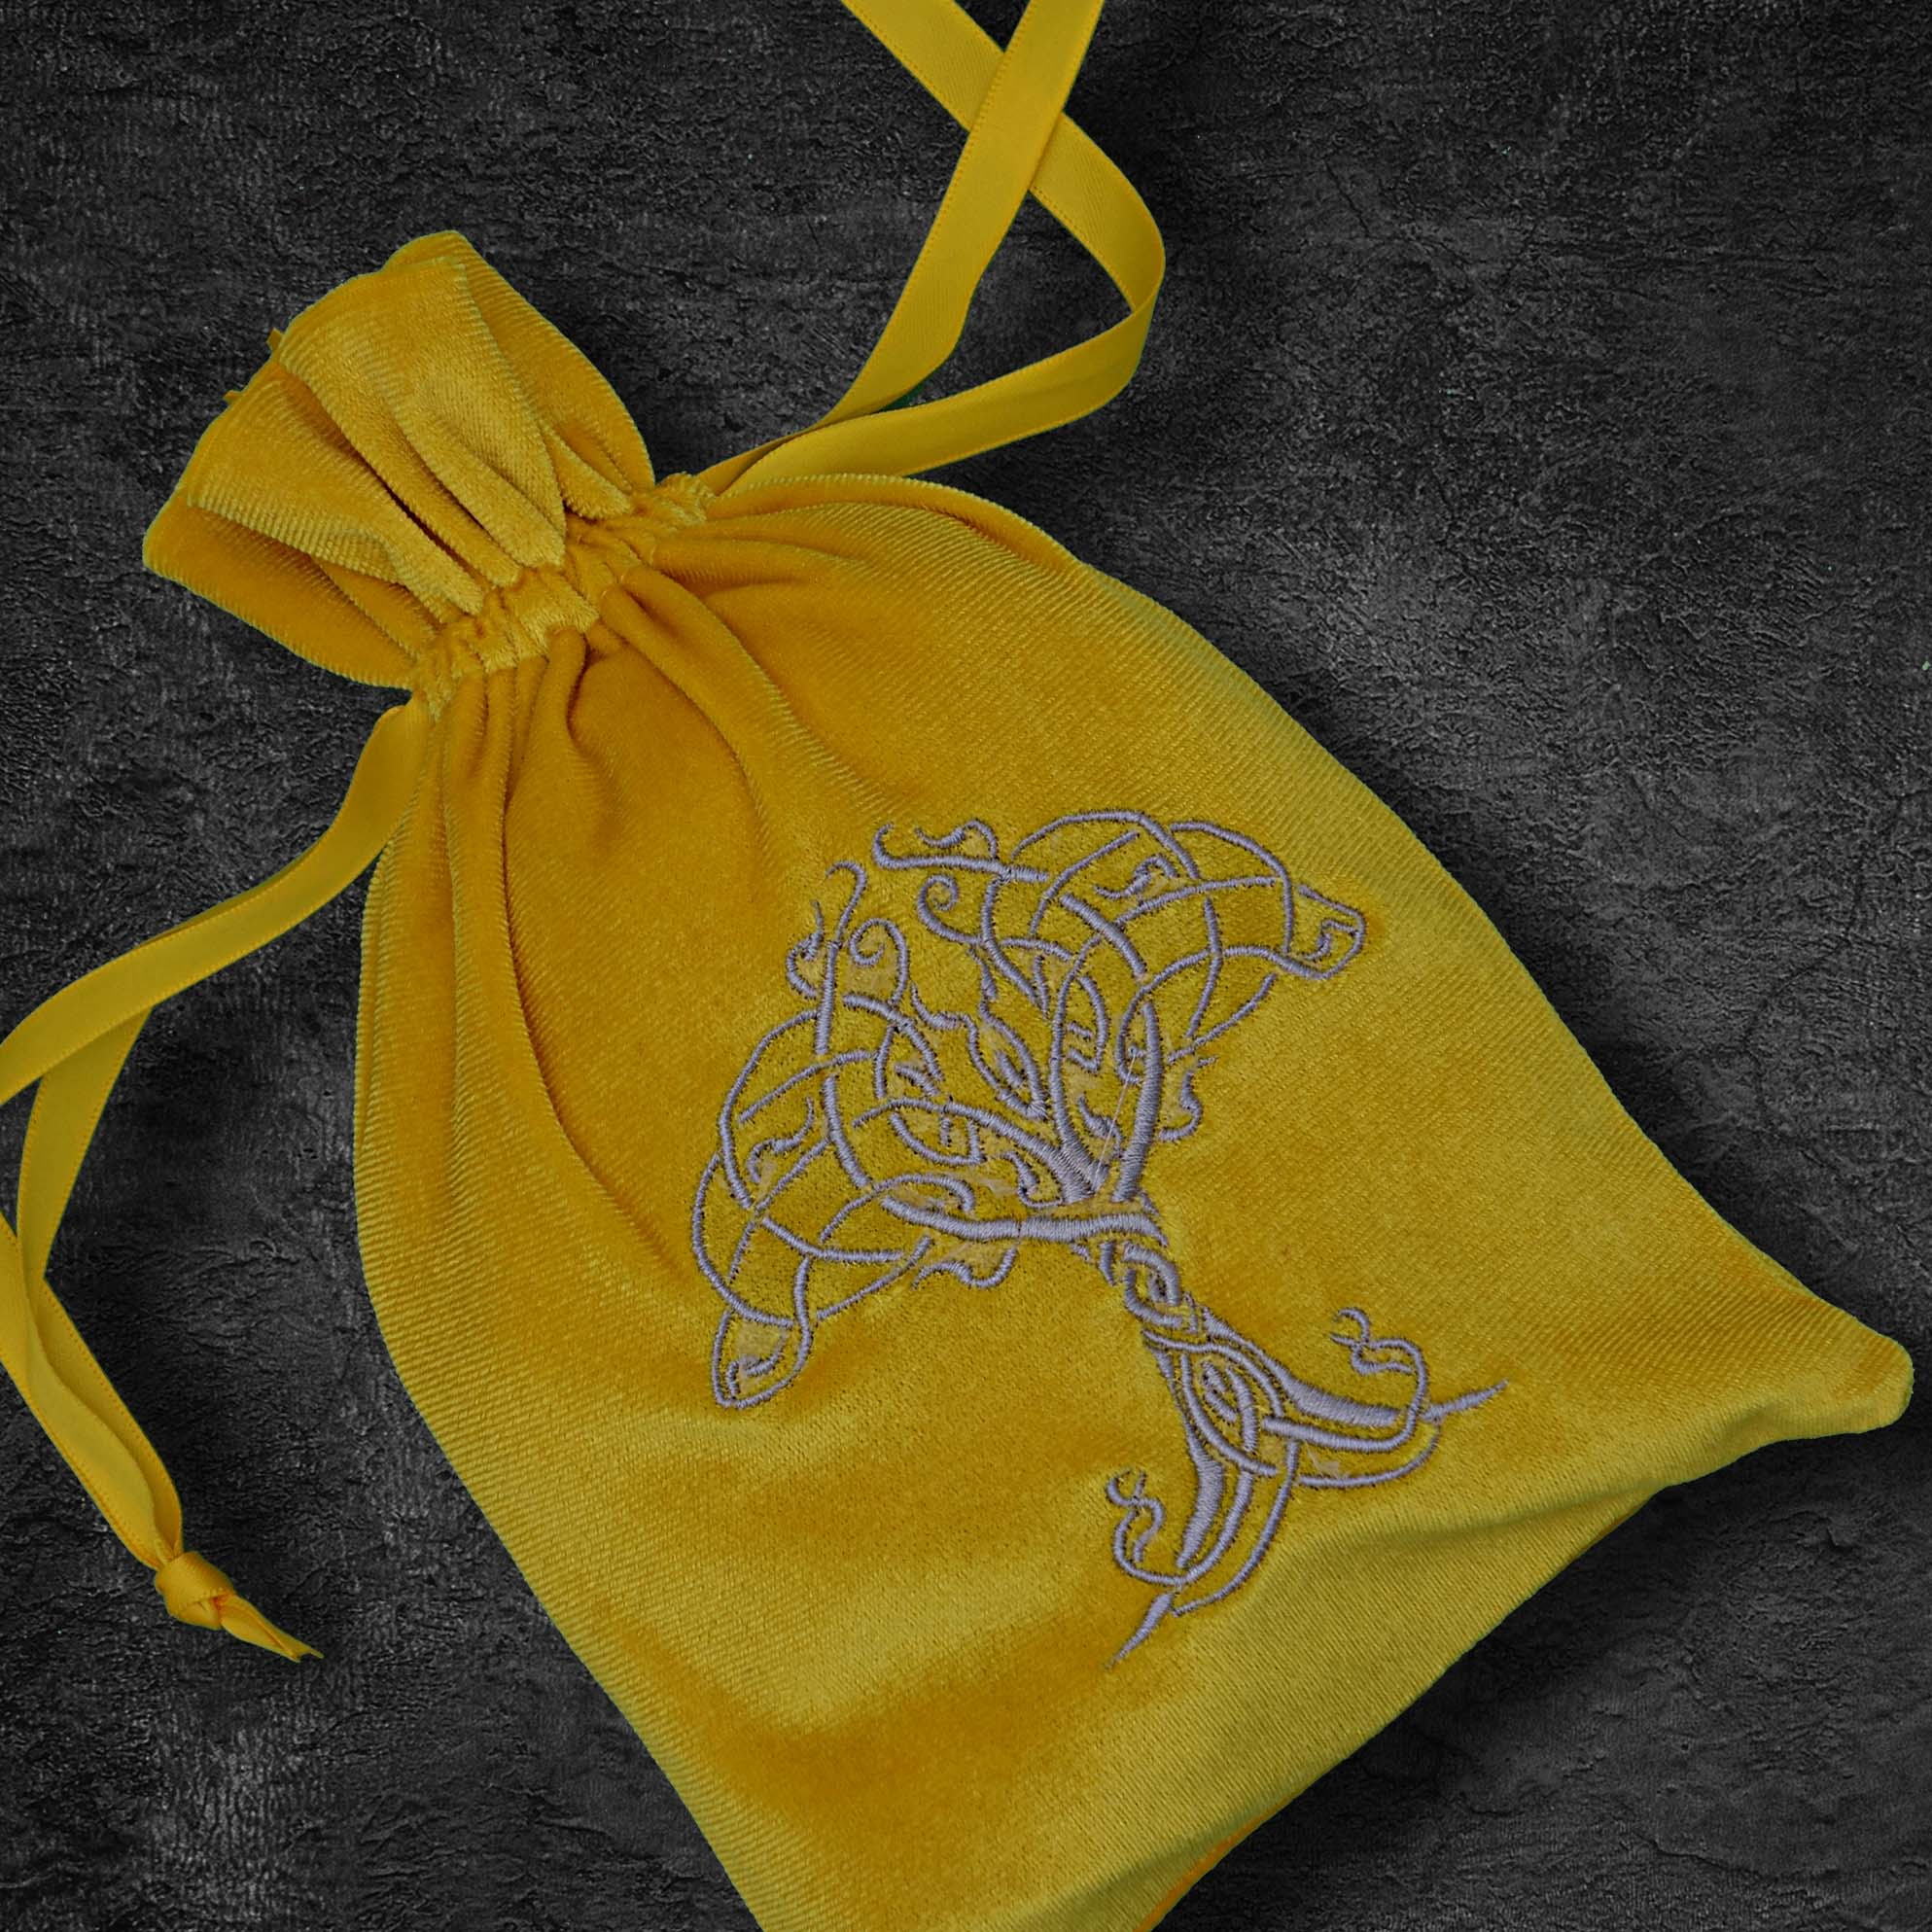 Tarot Bag with silver Tree of Life Bag